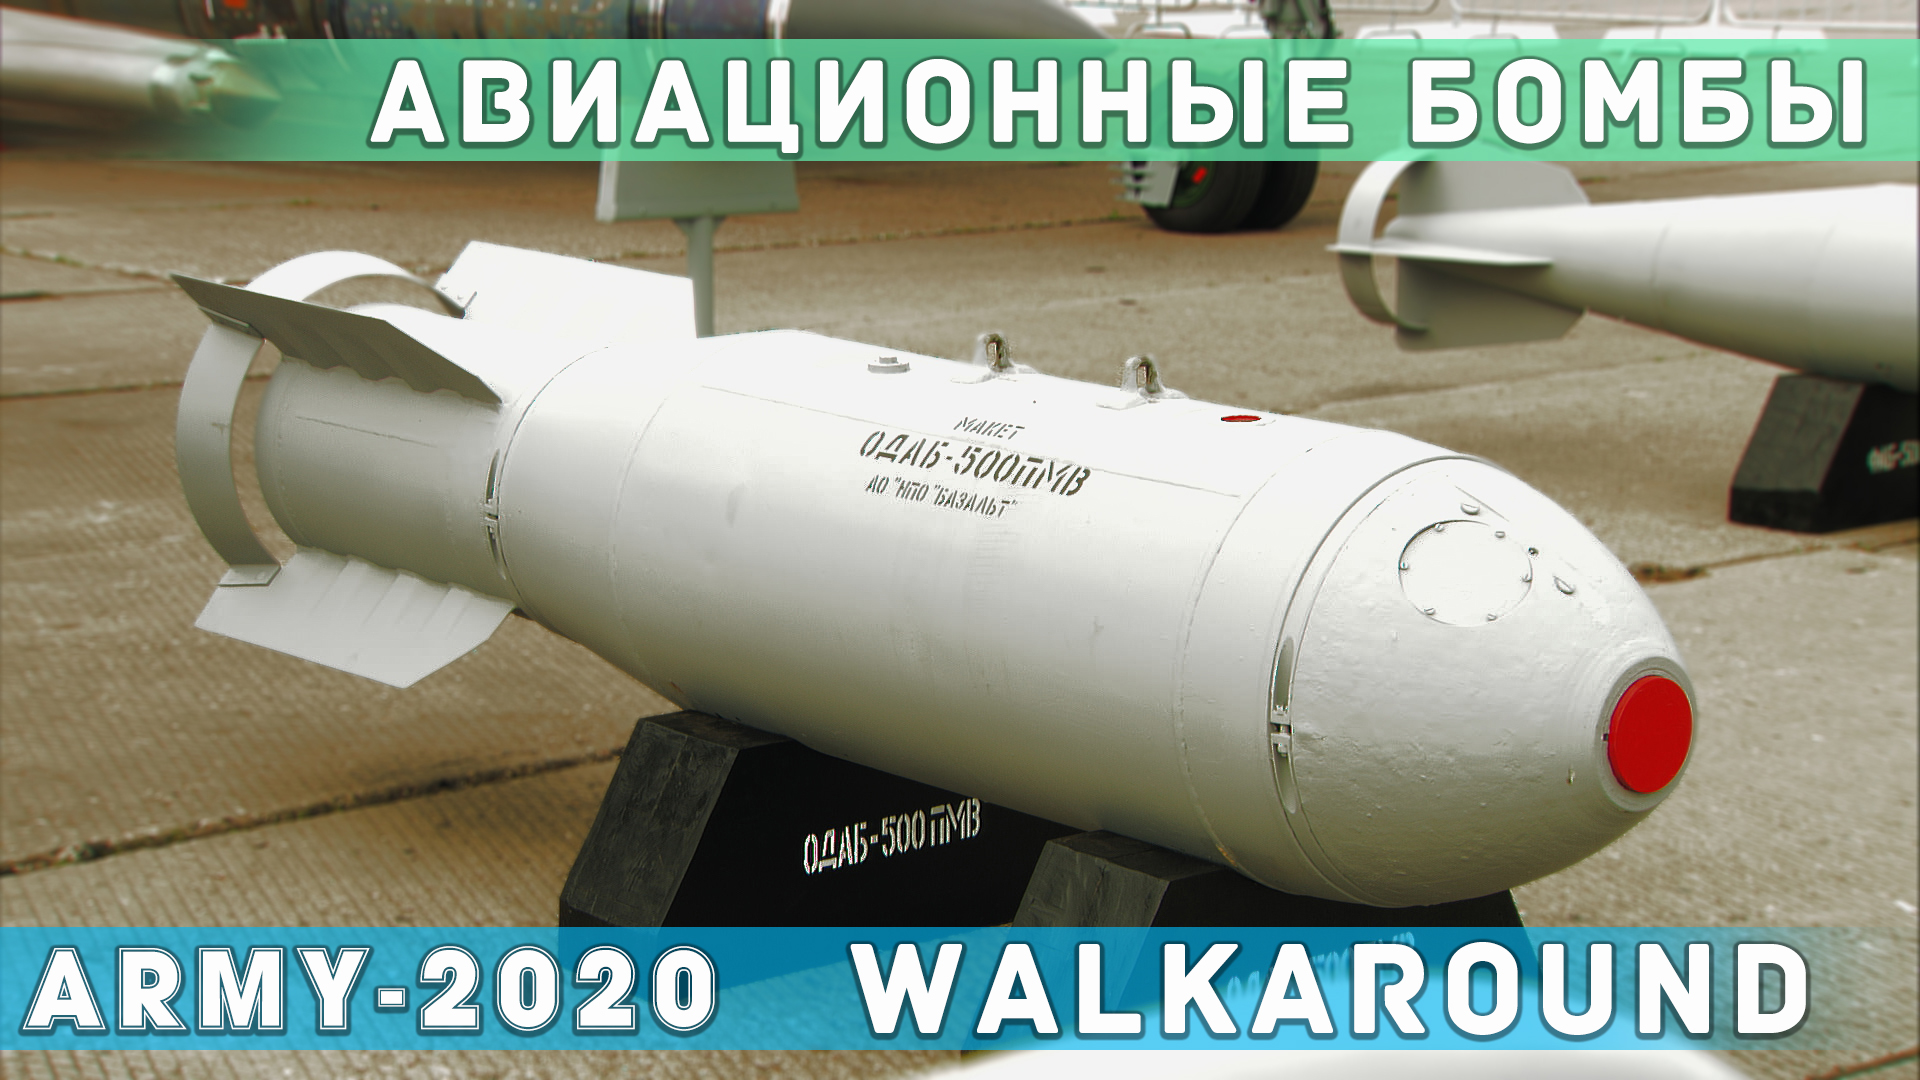 Одаб 500п характеристики. Авиационная бомба ПБК-500у «дрель». Авиационная бомба Фаб-100. Авиационная бомба ОДАБ-500. Авиабомбы Фаб 500.